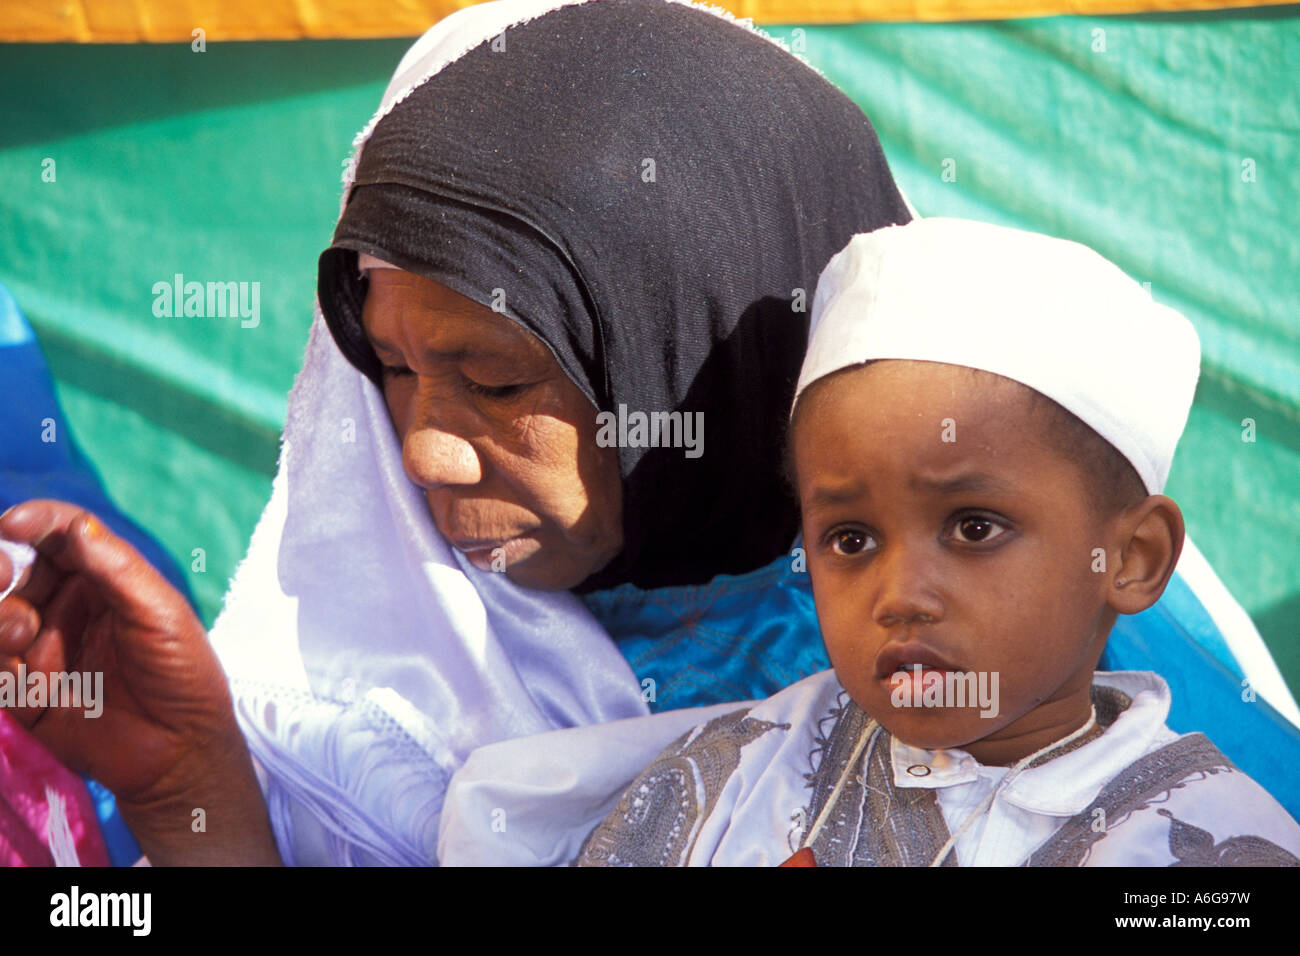 Libyan woman with child, Libya Stock Photo